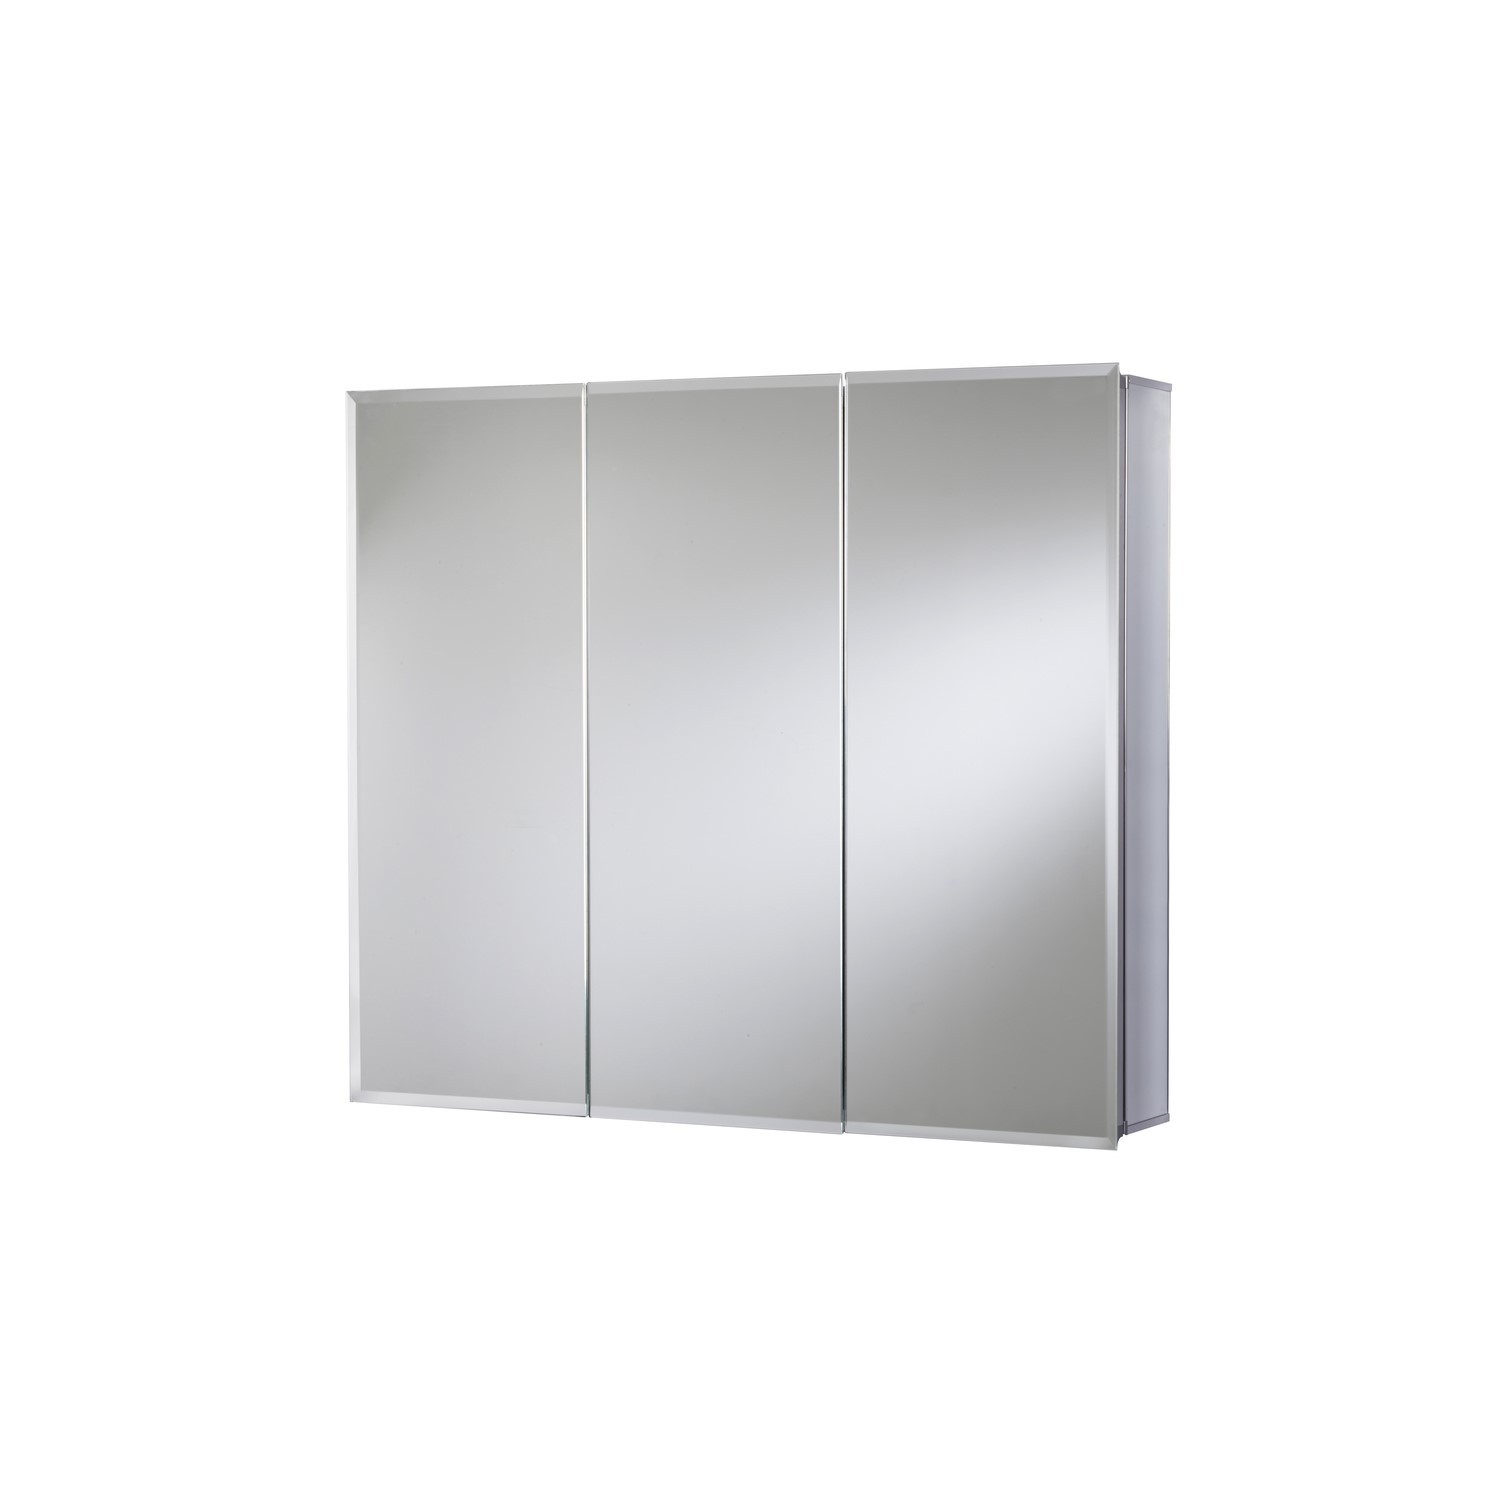 Chrome Mirrored Wall Bathroom Cabinet 914 x 660mm - Croydex